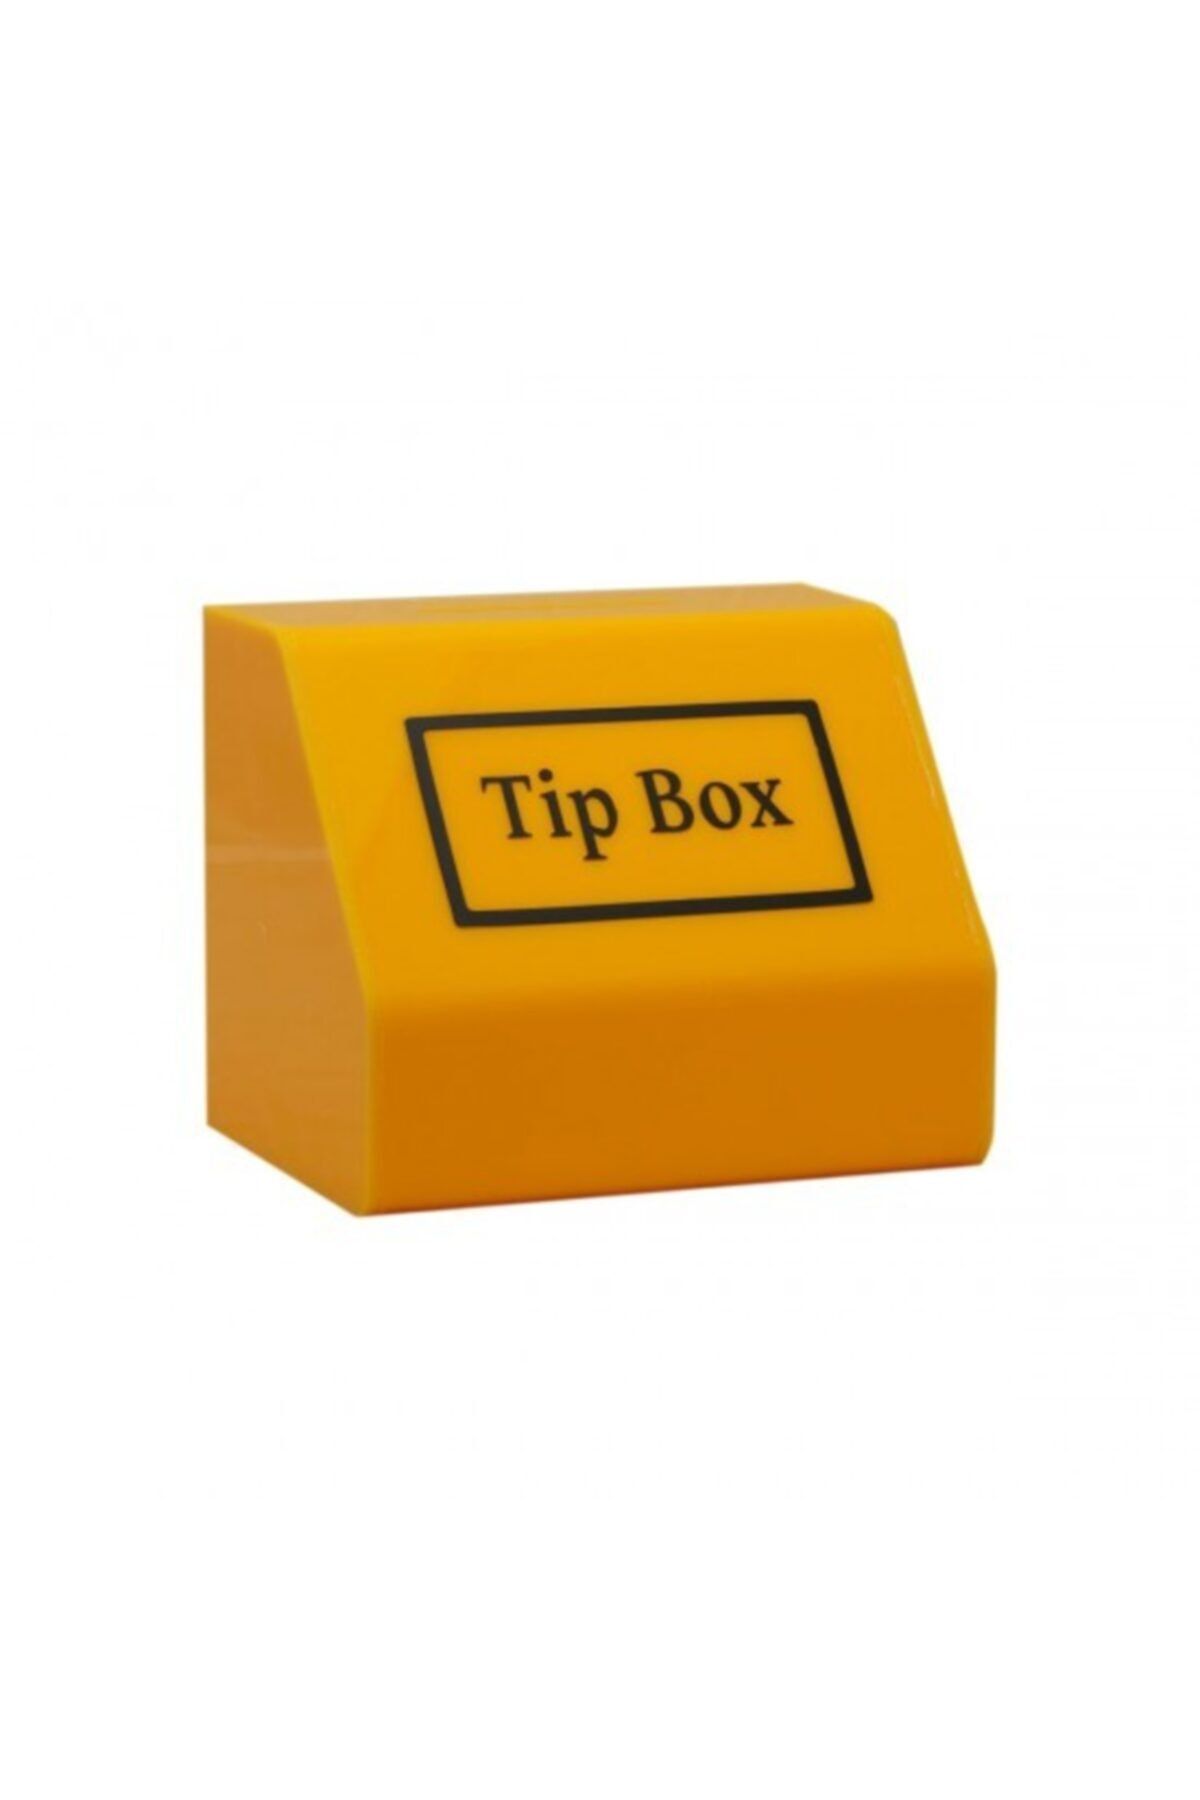 Karlobi Pleksi Tip Box Bahşiş Kutusu Sarı 20x13x12